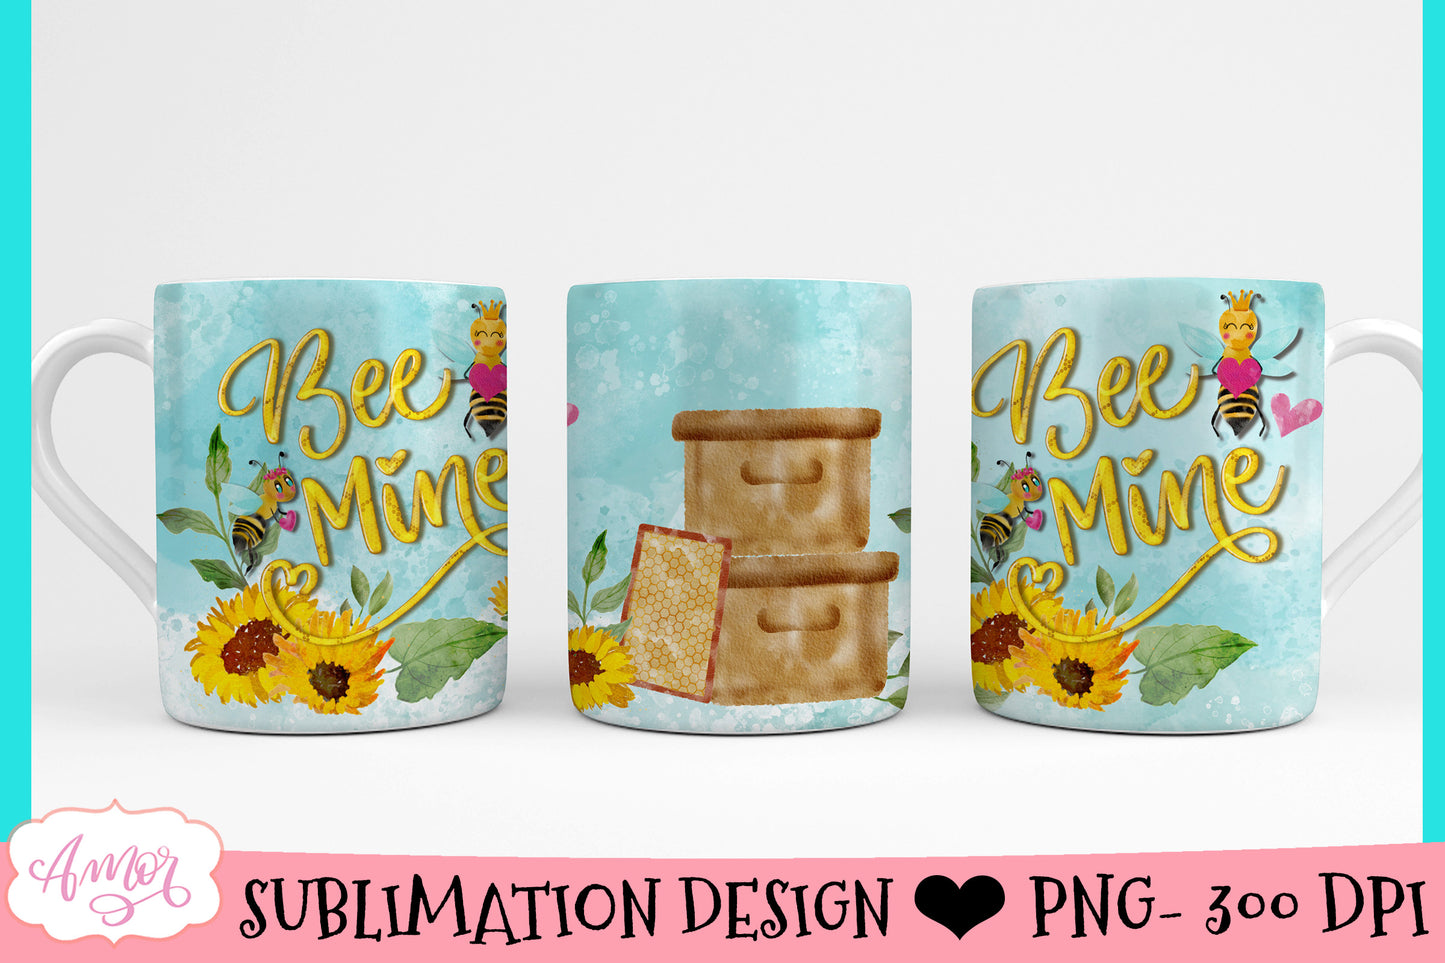 Bee mine mug wrap for sublimation